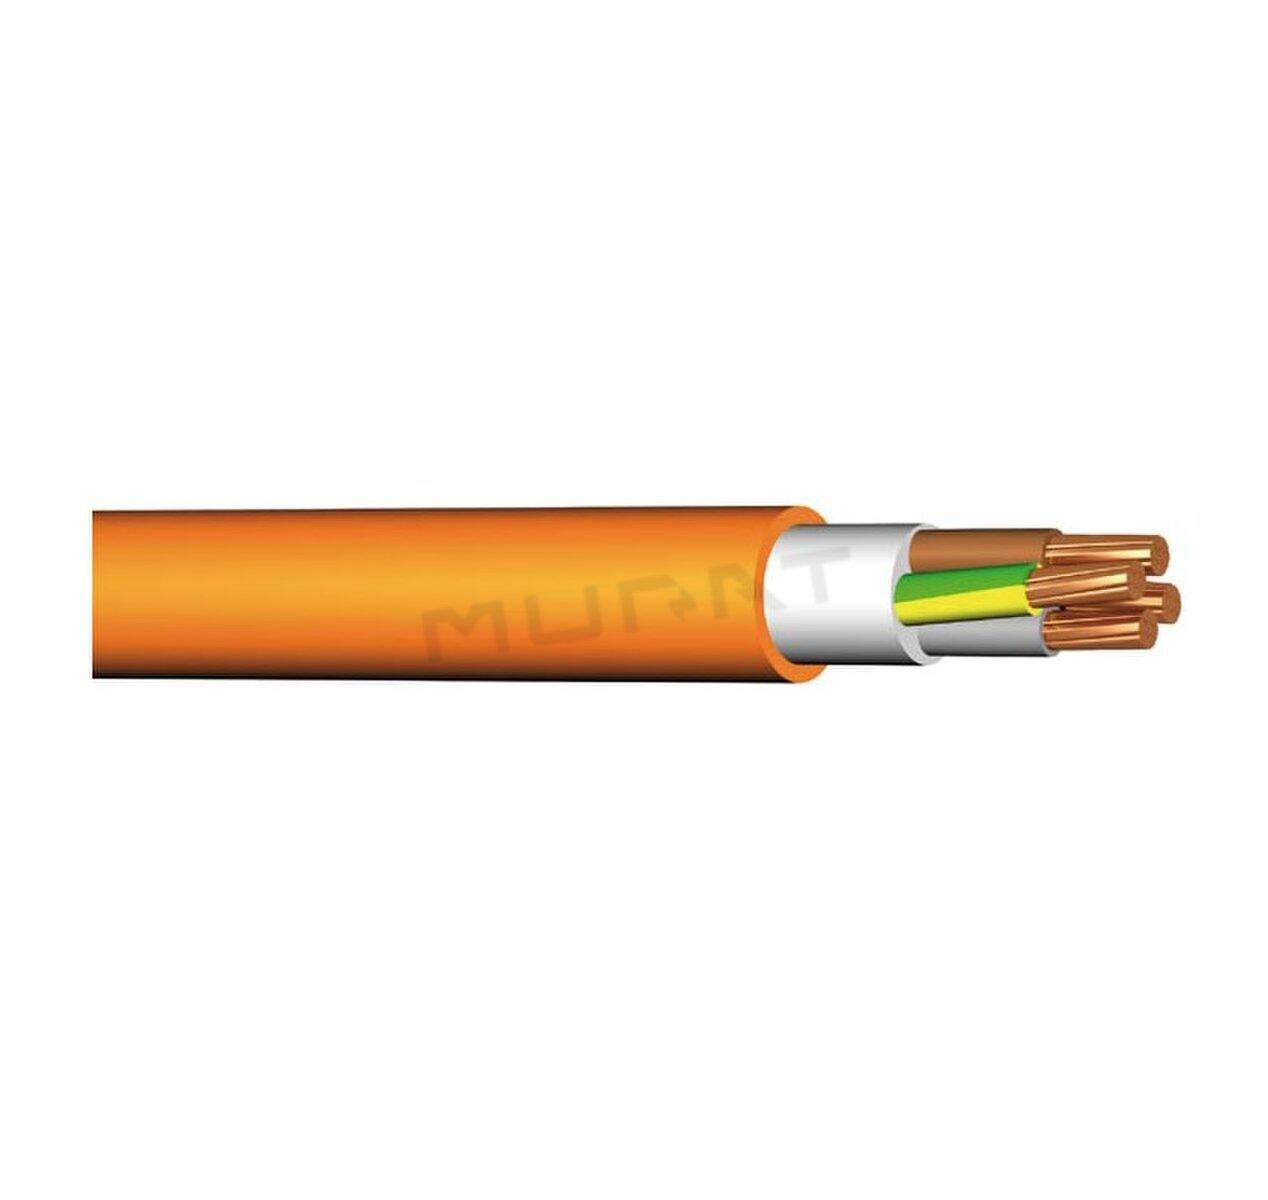 Kábel PRAFlaSafe X-J 1x95 mm2 RM B2ca s1d1a1